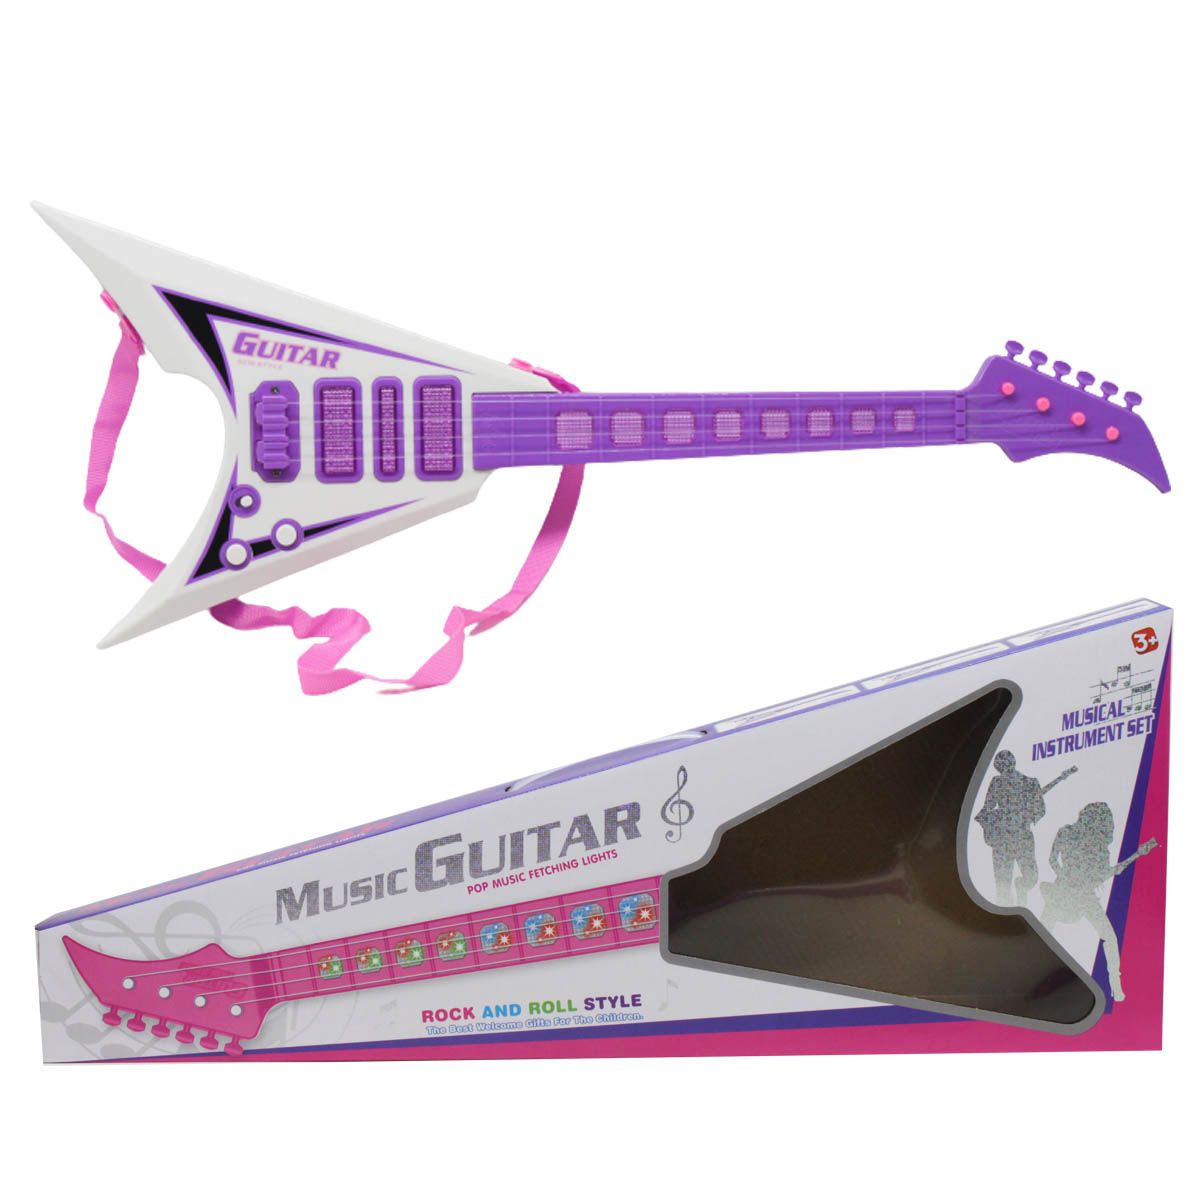 Іграшка музична "Music Guitar", бузкова